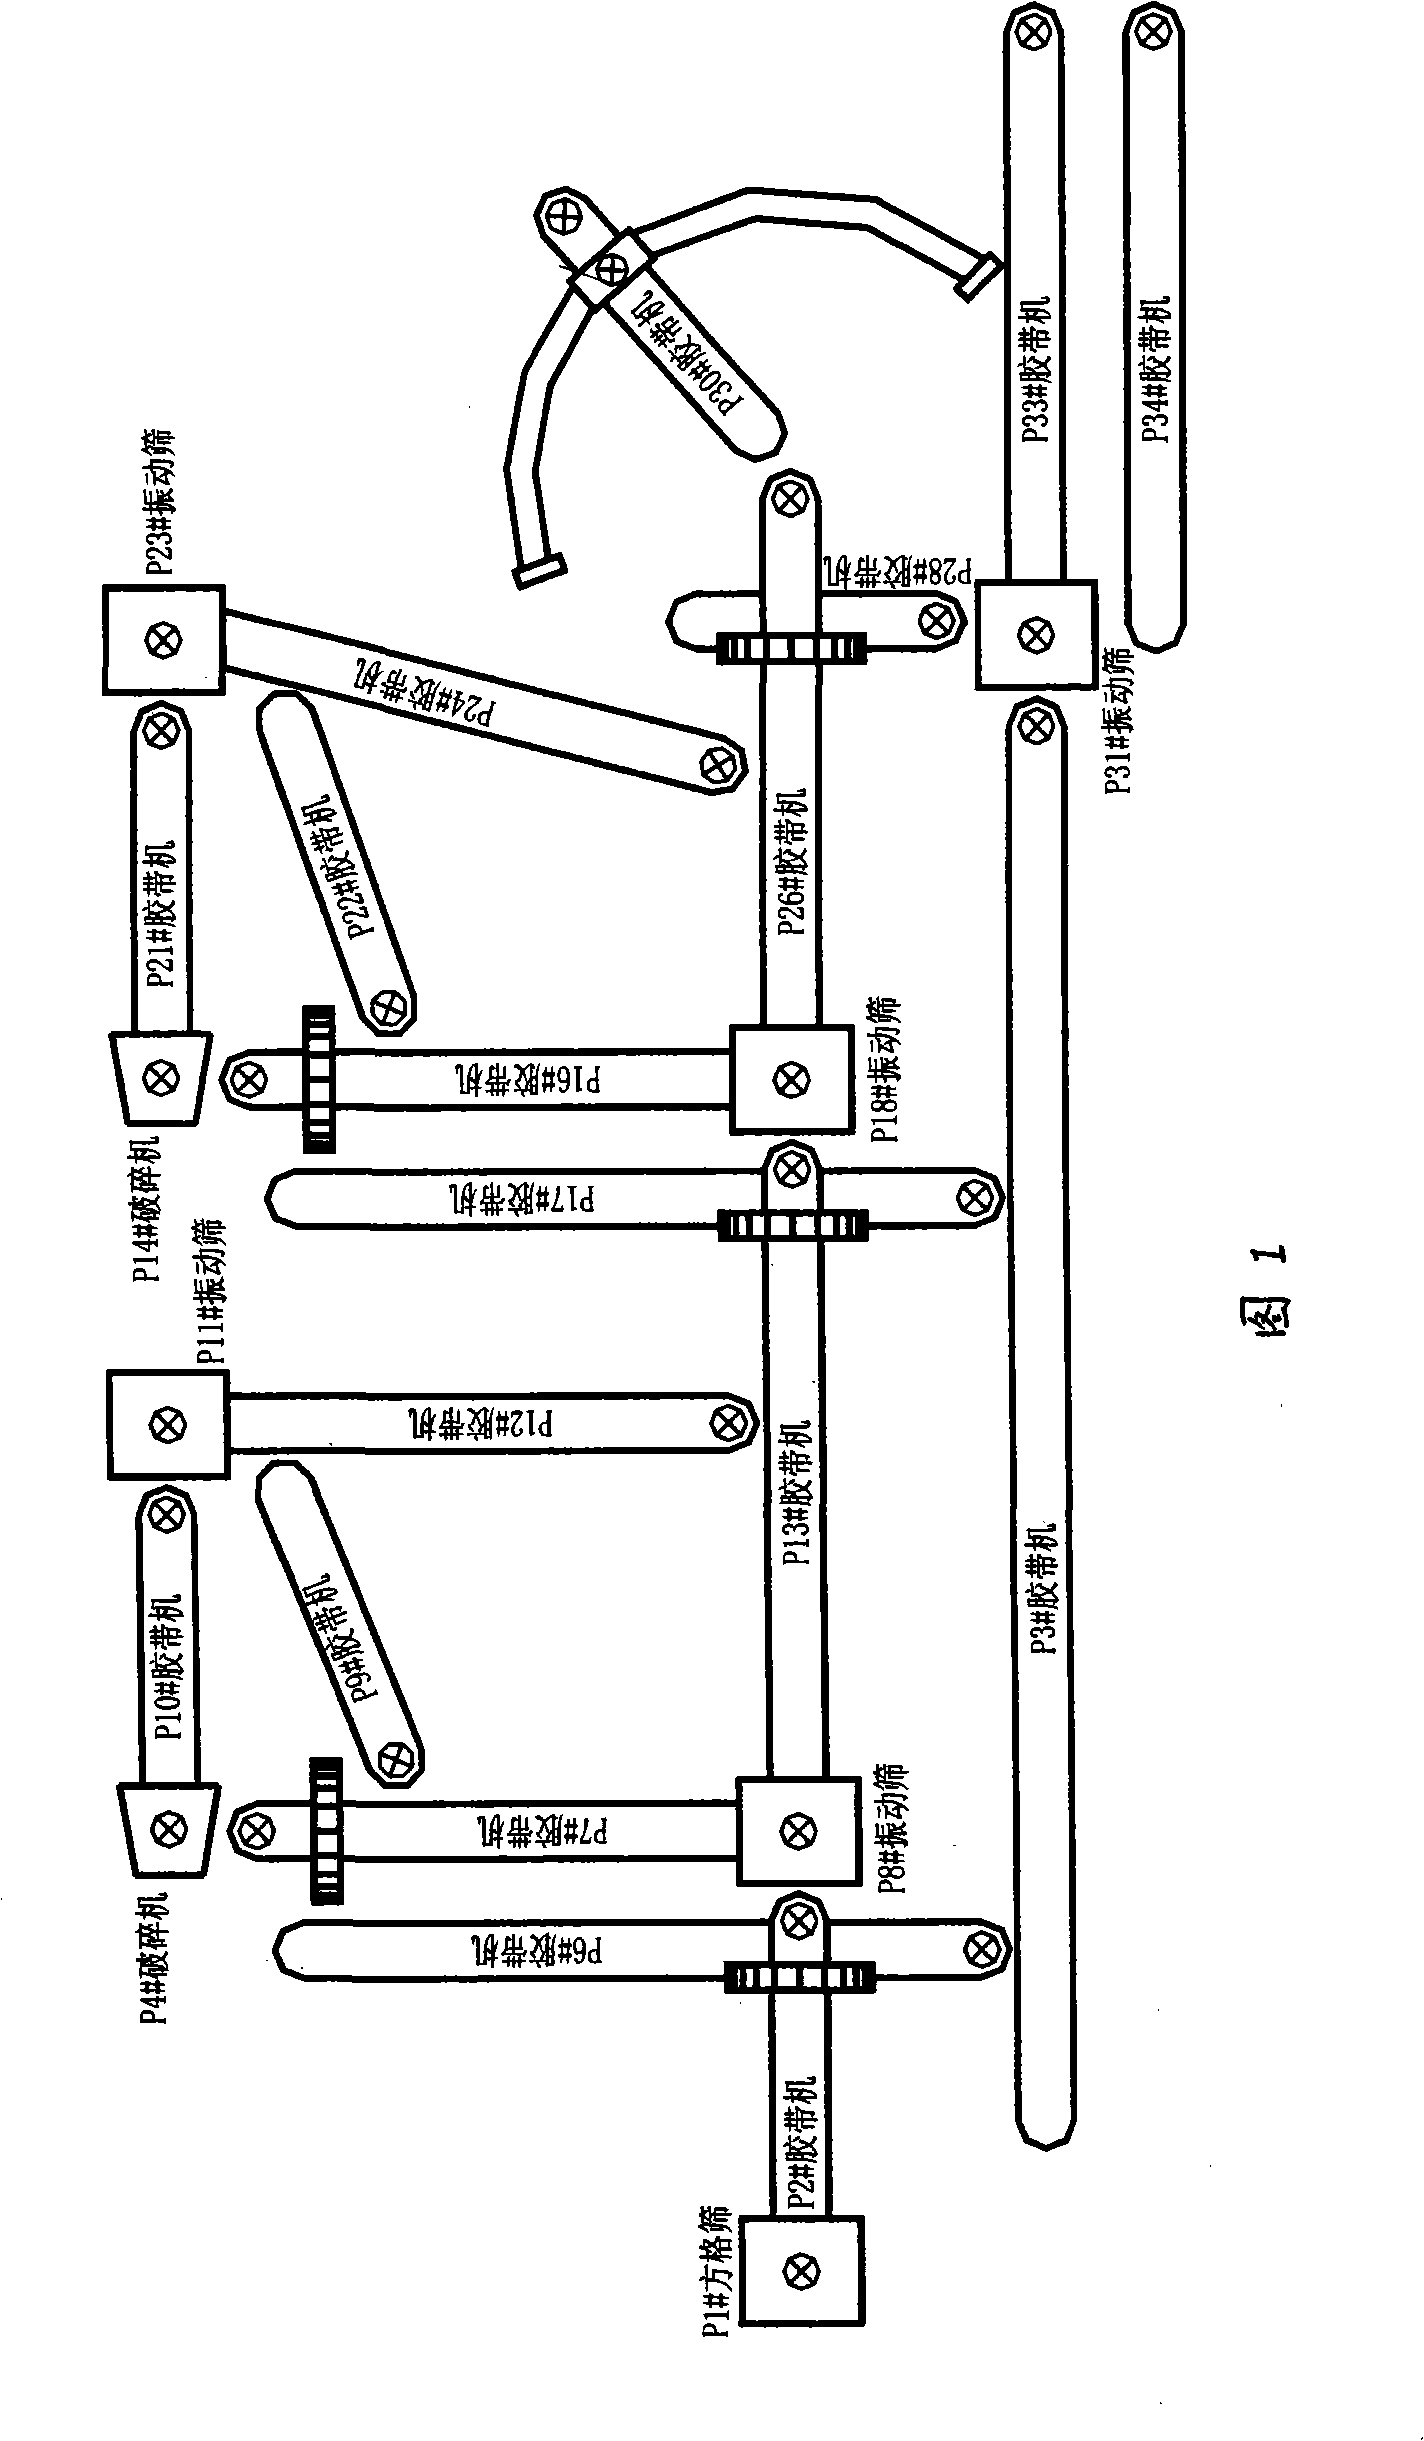 Control method for processing cold steel scoria